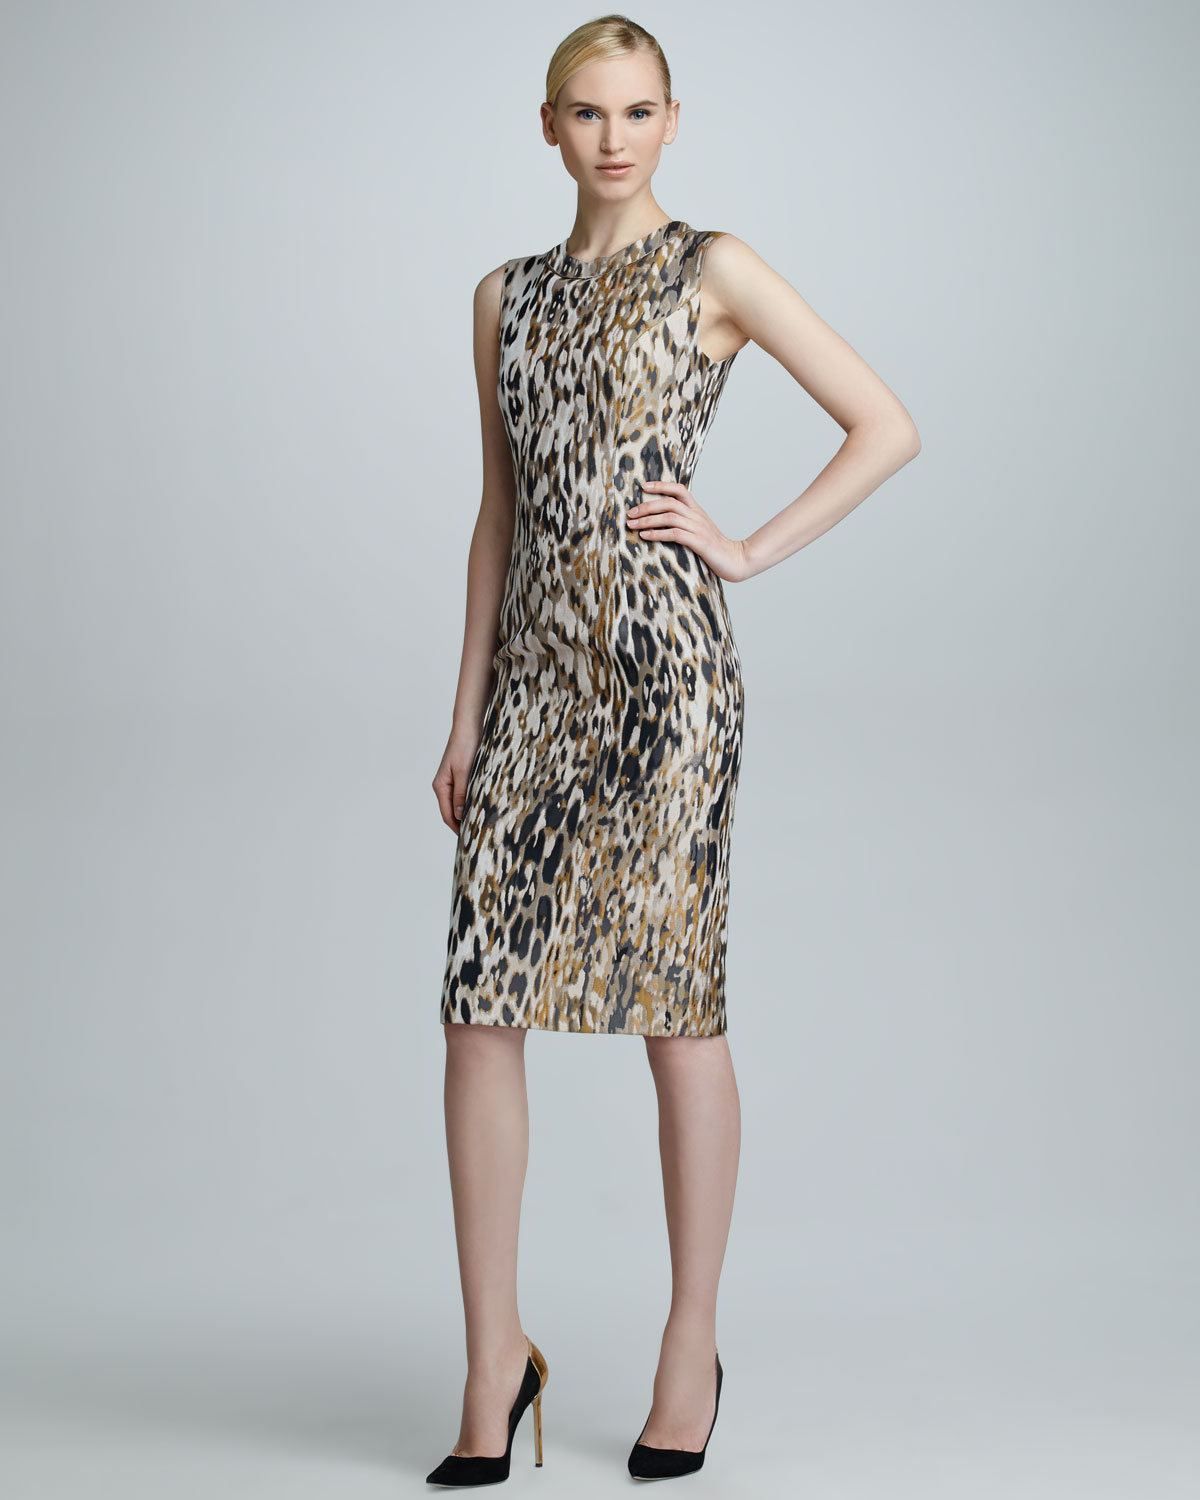 carolina herrera leopard dress